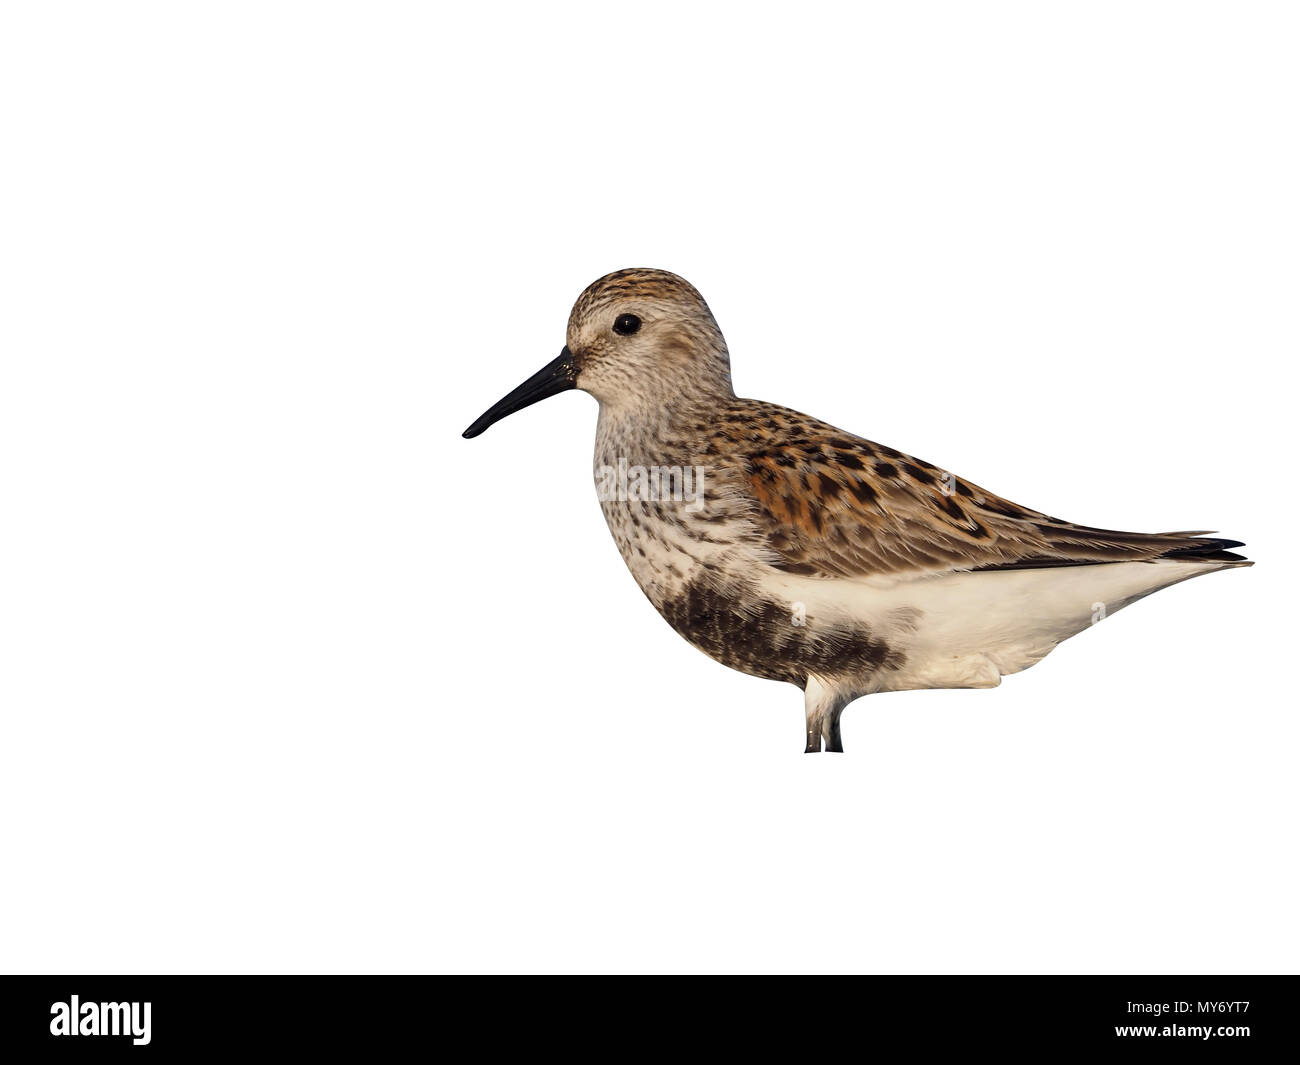 Dunlin, Calidris alpina, single bird in water, Spain, May 2018 Stock Photo